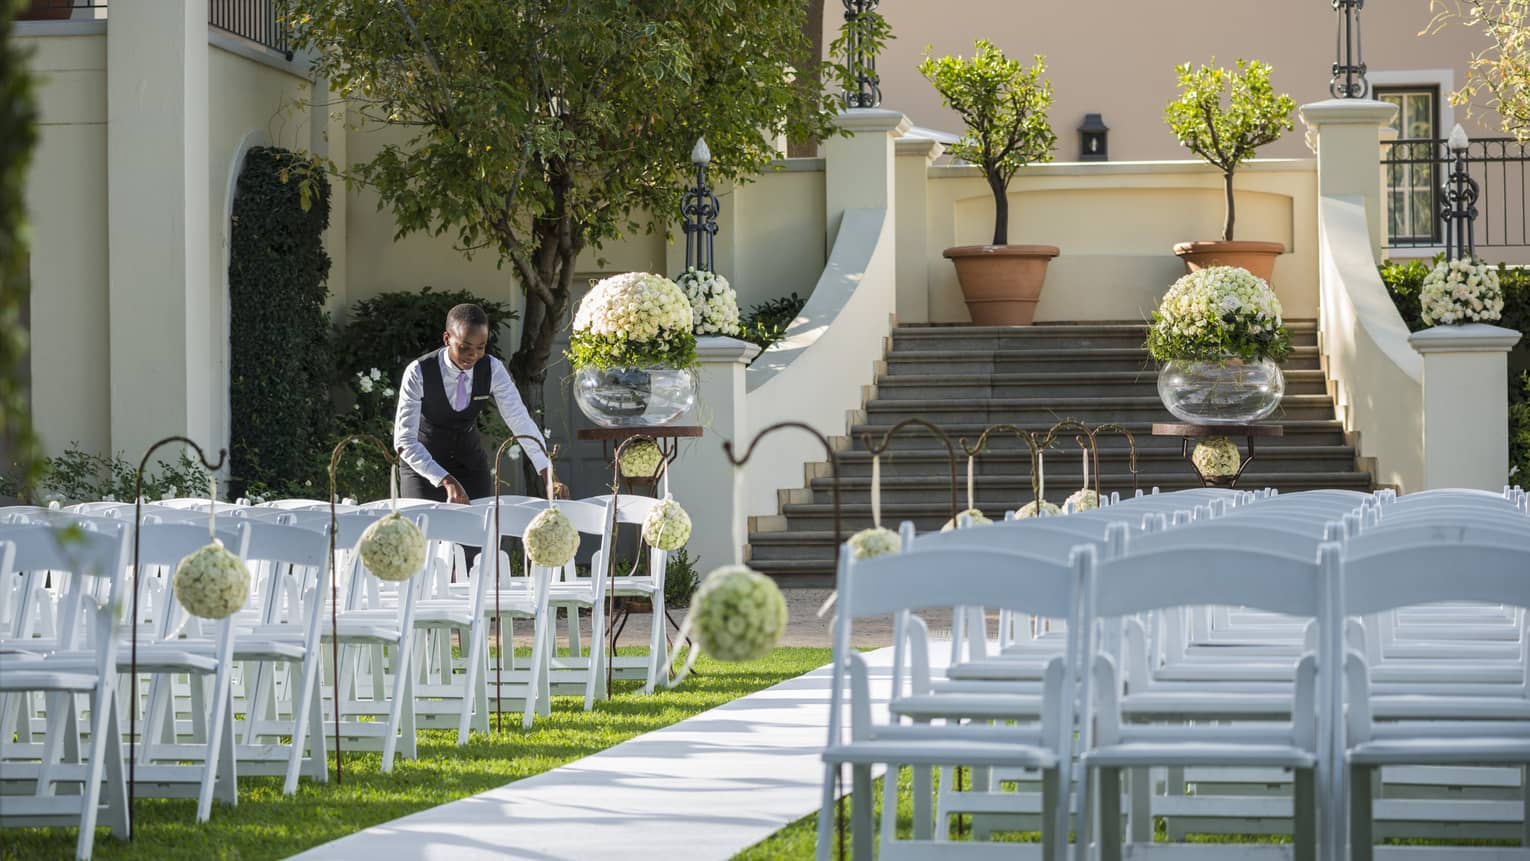 Hotel staff arranges white chairs on garden lawn for wedding service 